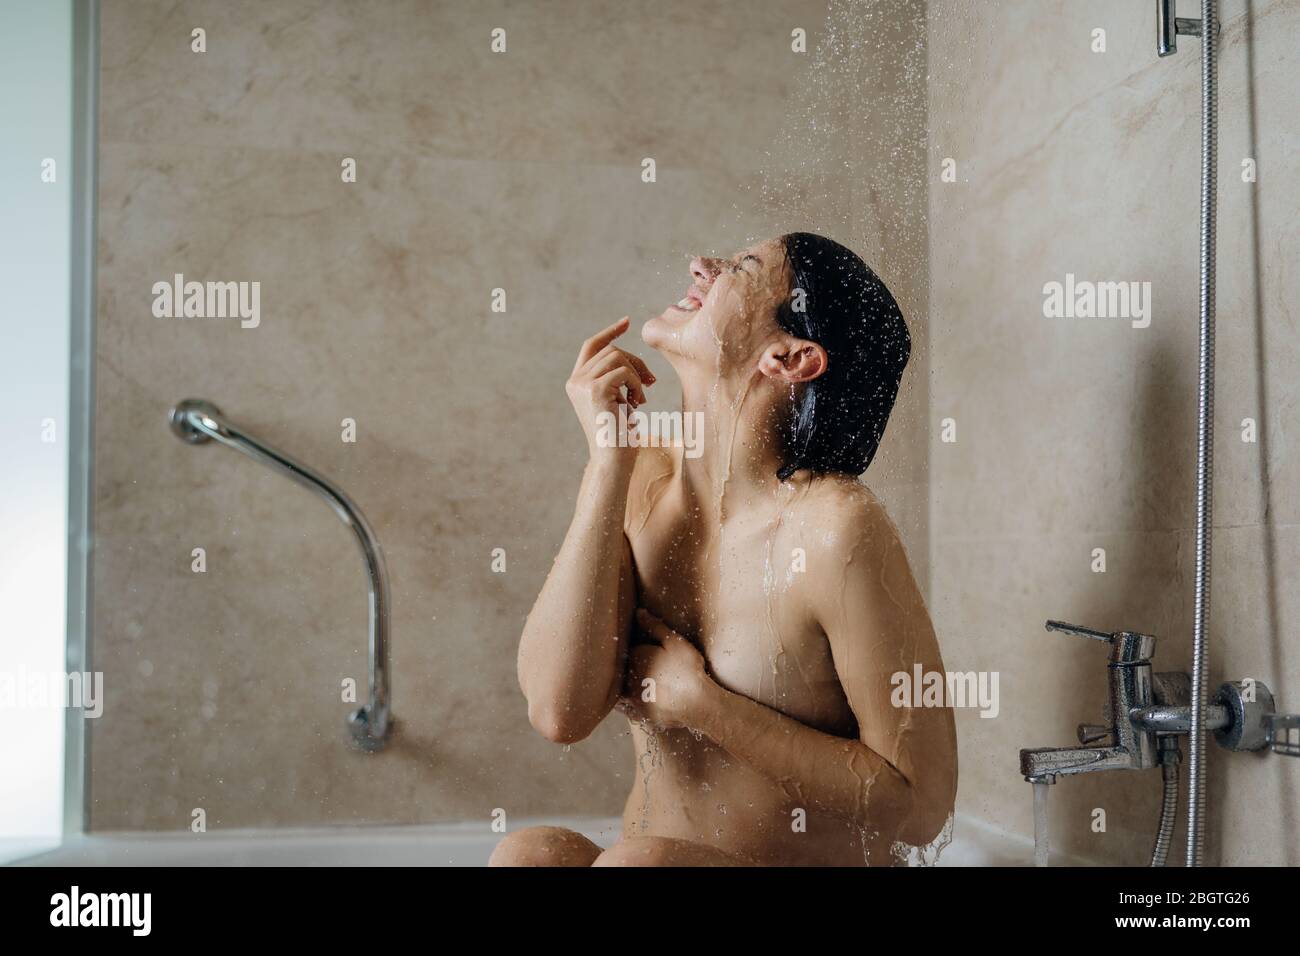 czech teen in the shower